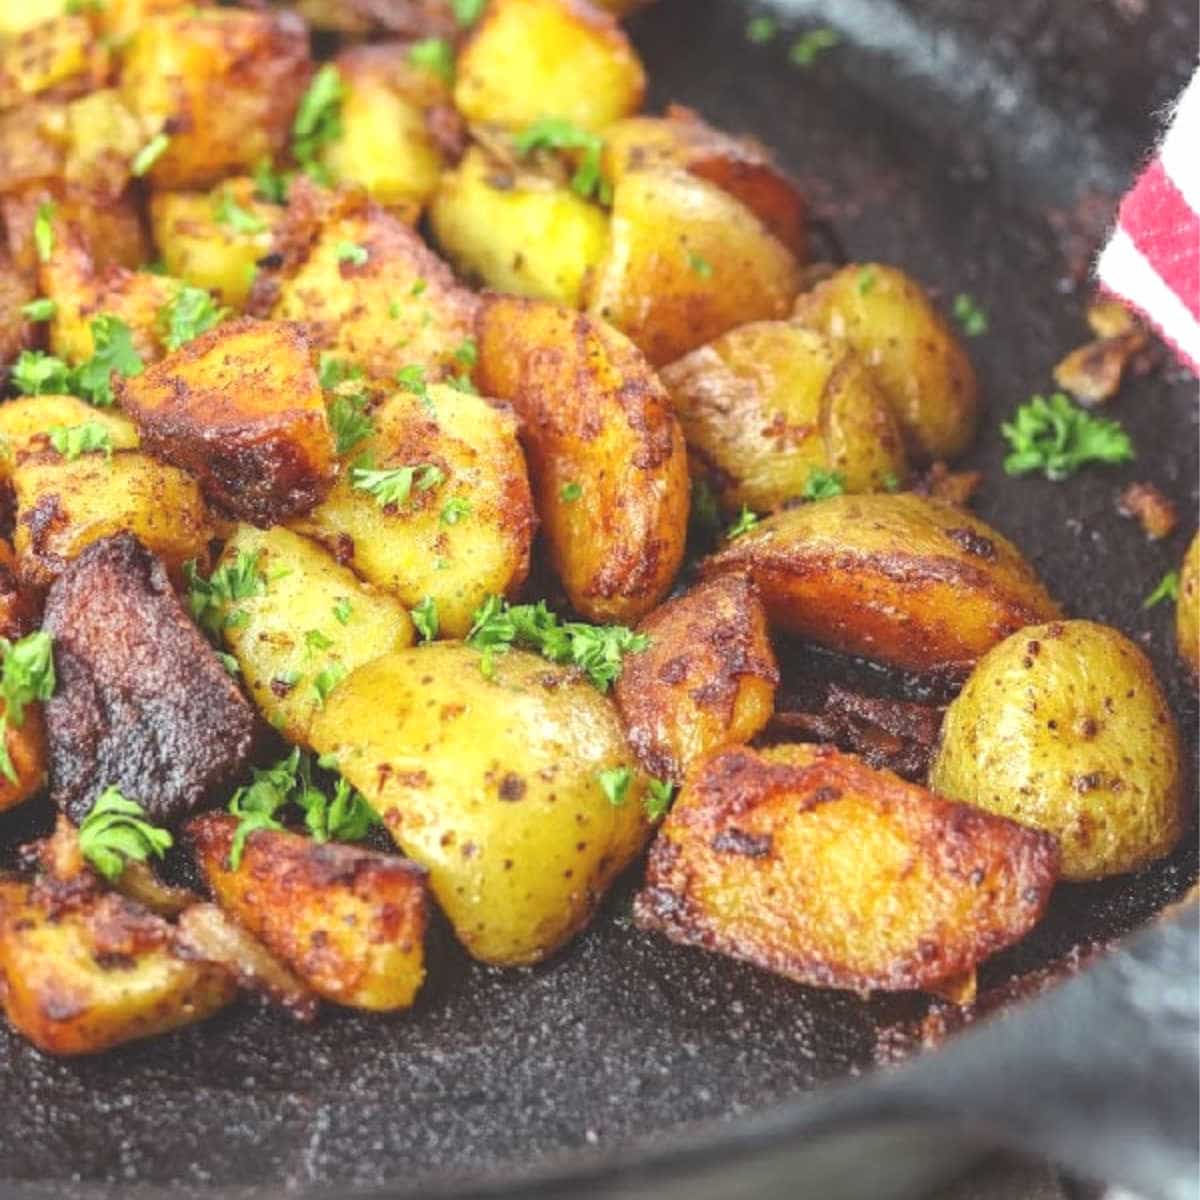 Closeup of potatoes frying in the pan.